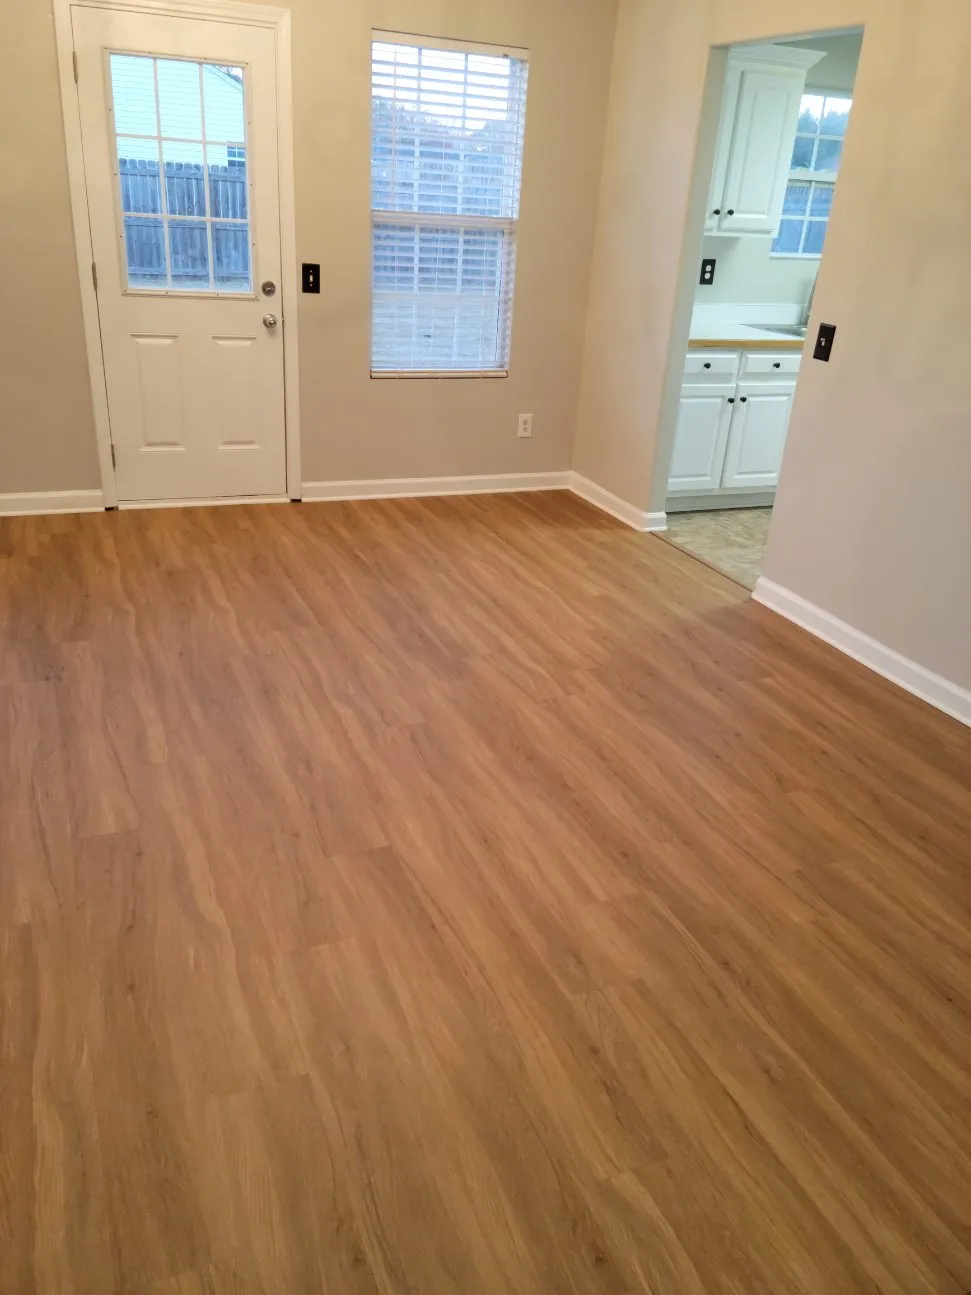 Newly installed hardwood floor